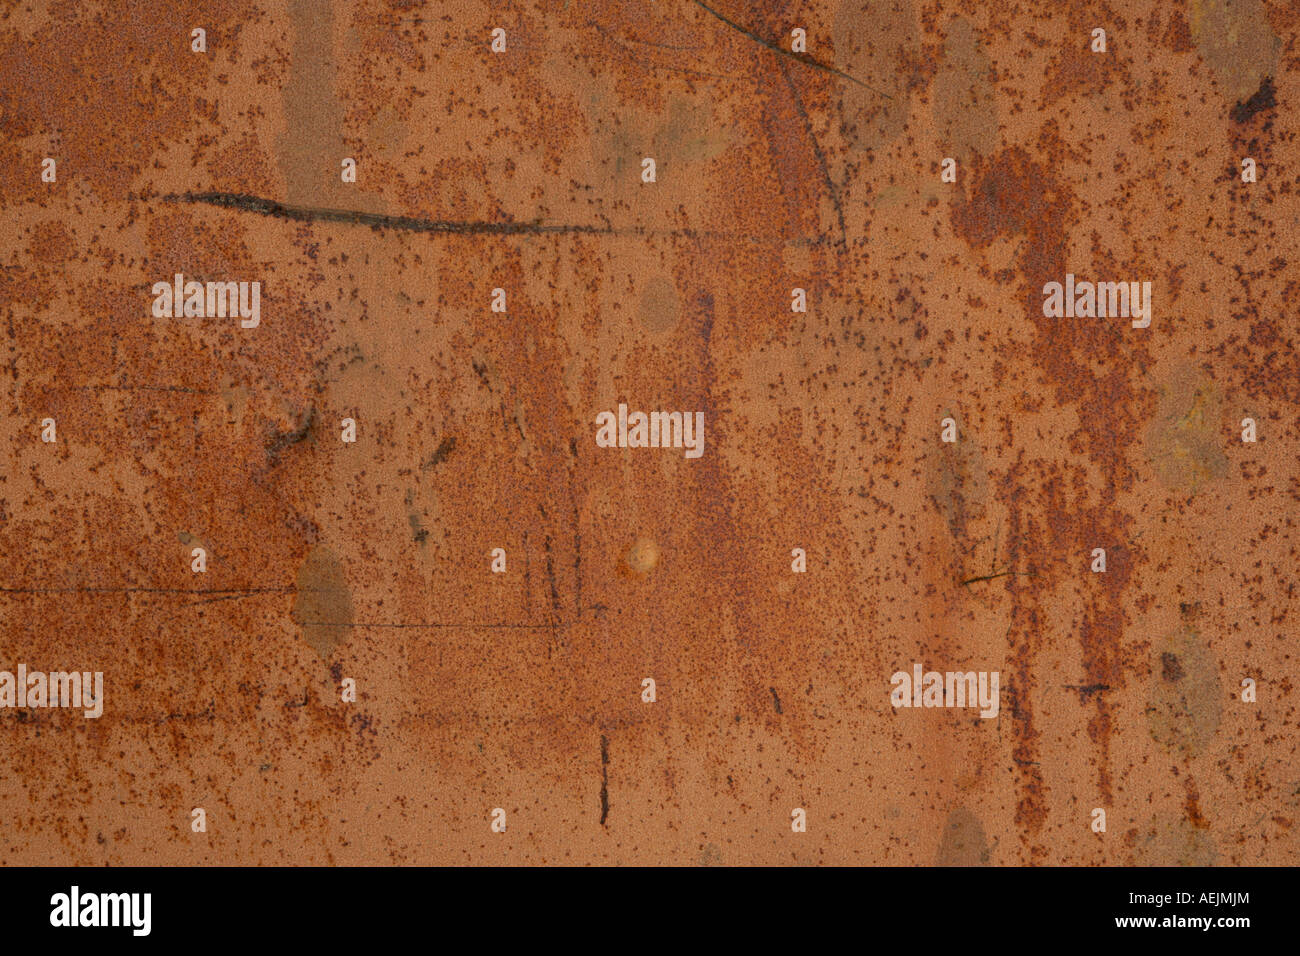 Iron plate with rusty patina Stock Photo